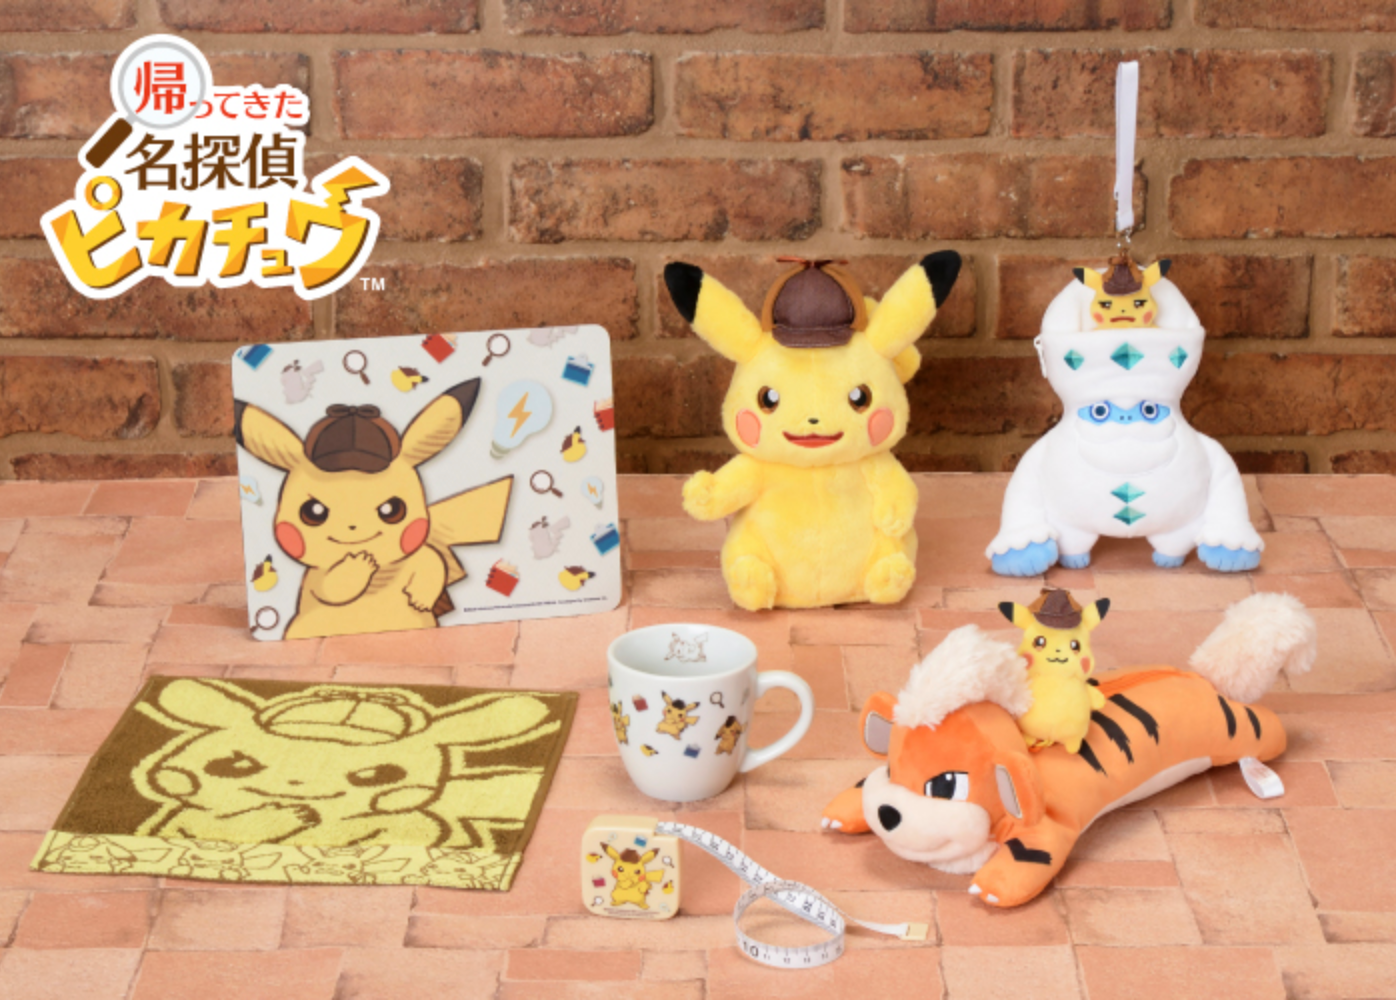 Detective Pikachu Returns merchandise collection